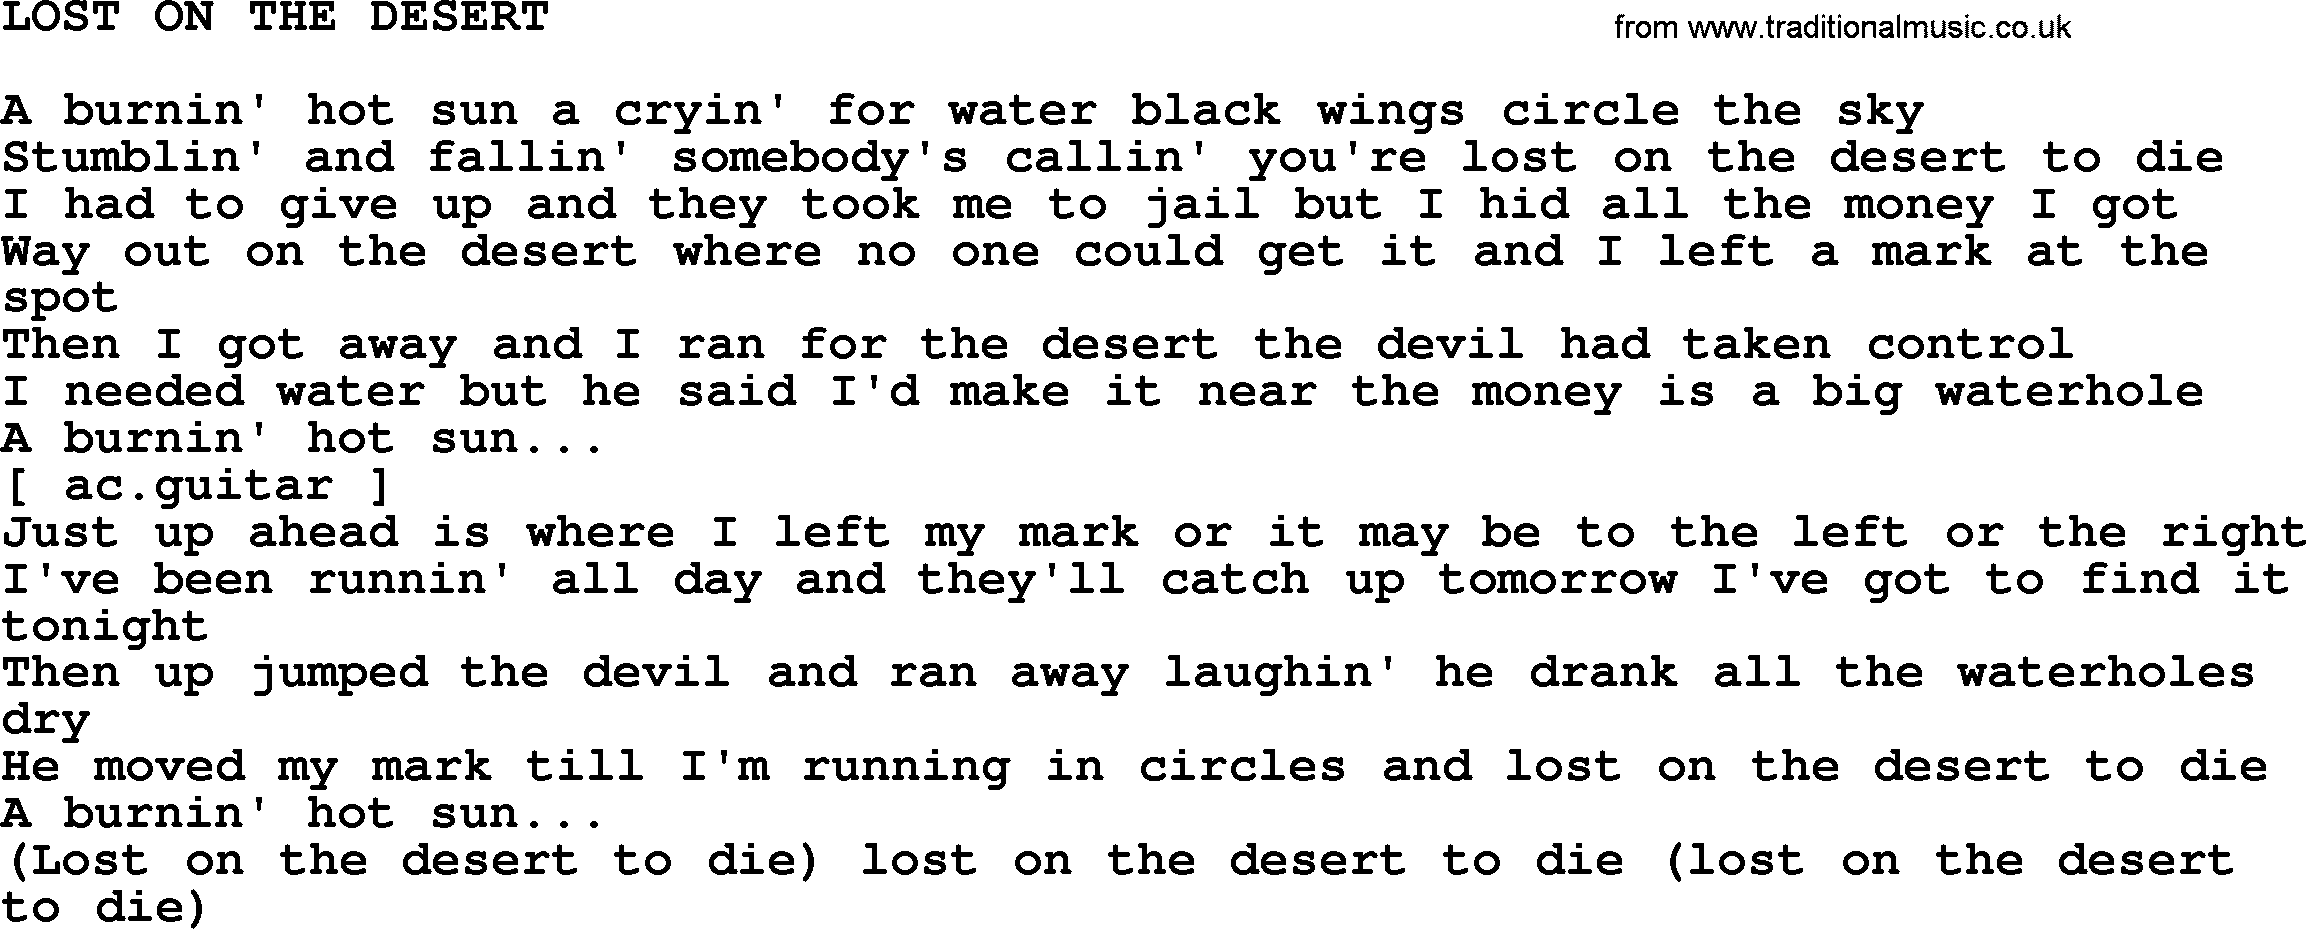 Johnny Cash song Lost On The Desert.txt lyrics